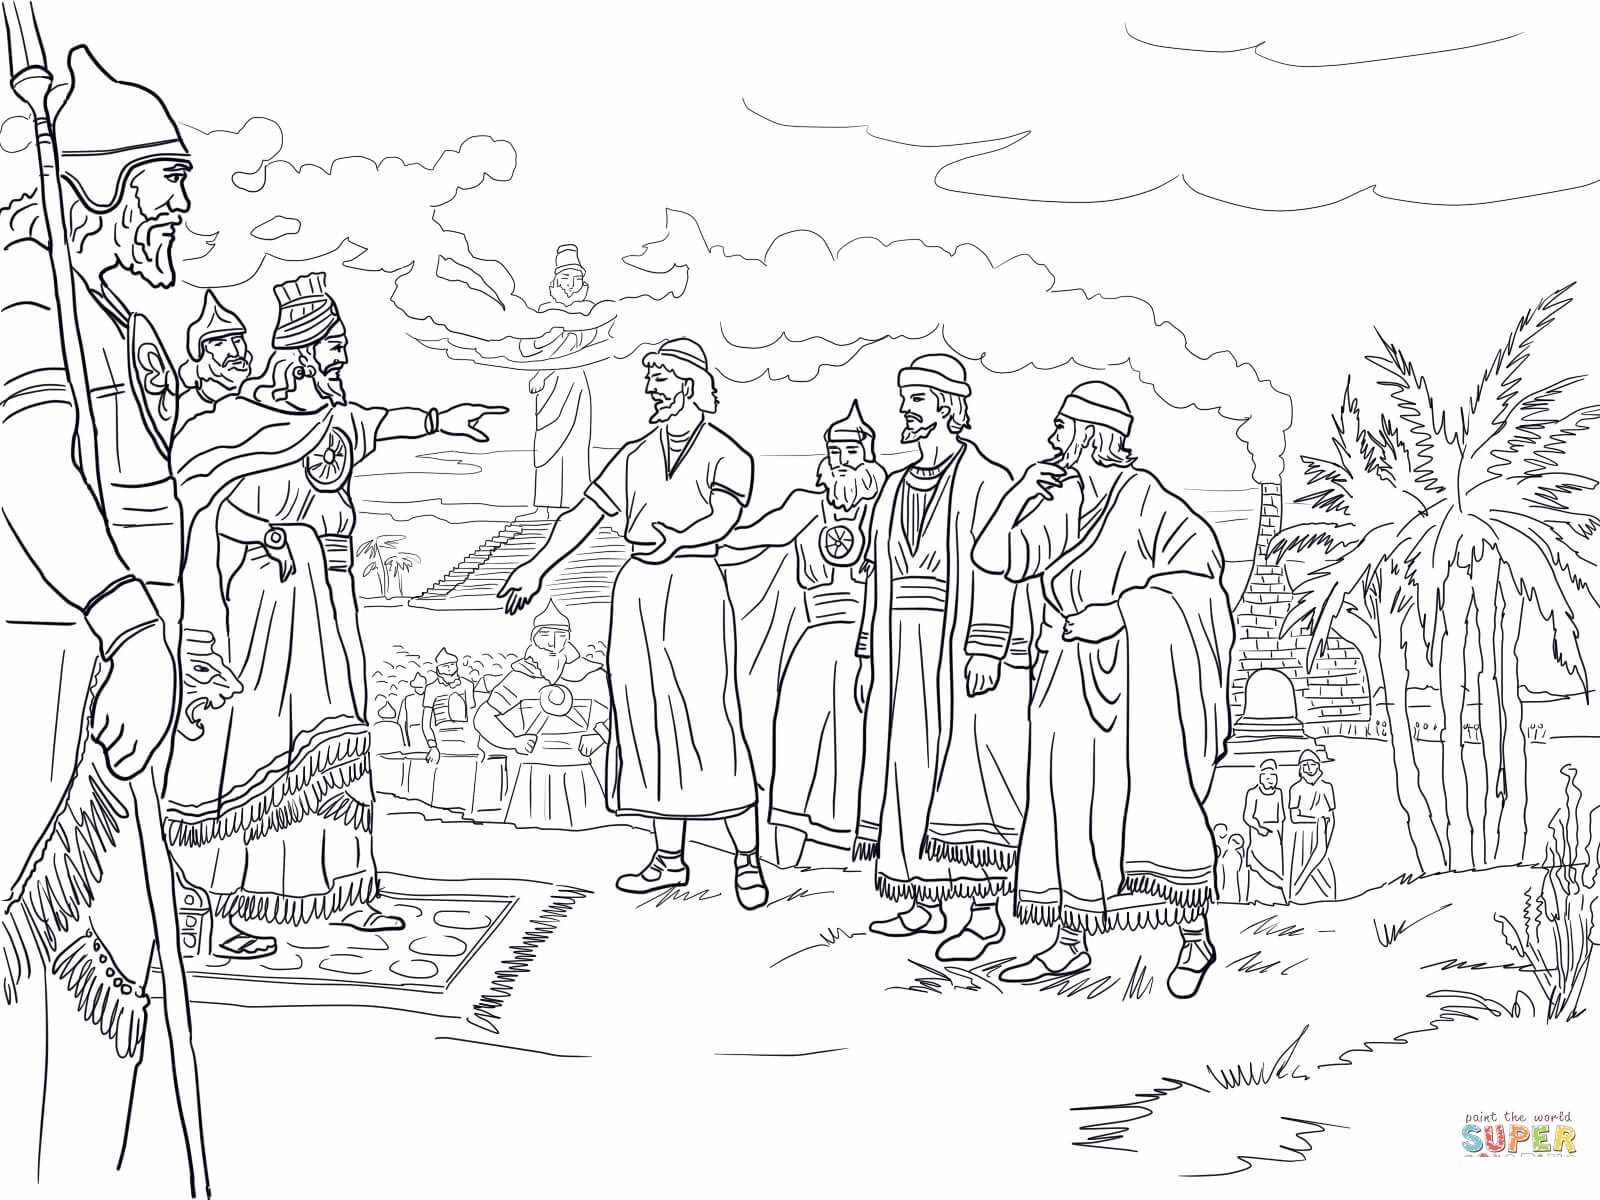 Shadrach, Meshach et Abed-Nego devant le roi Nebucadnetsar